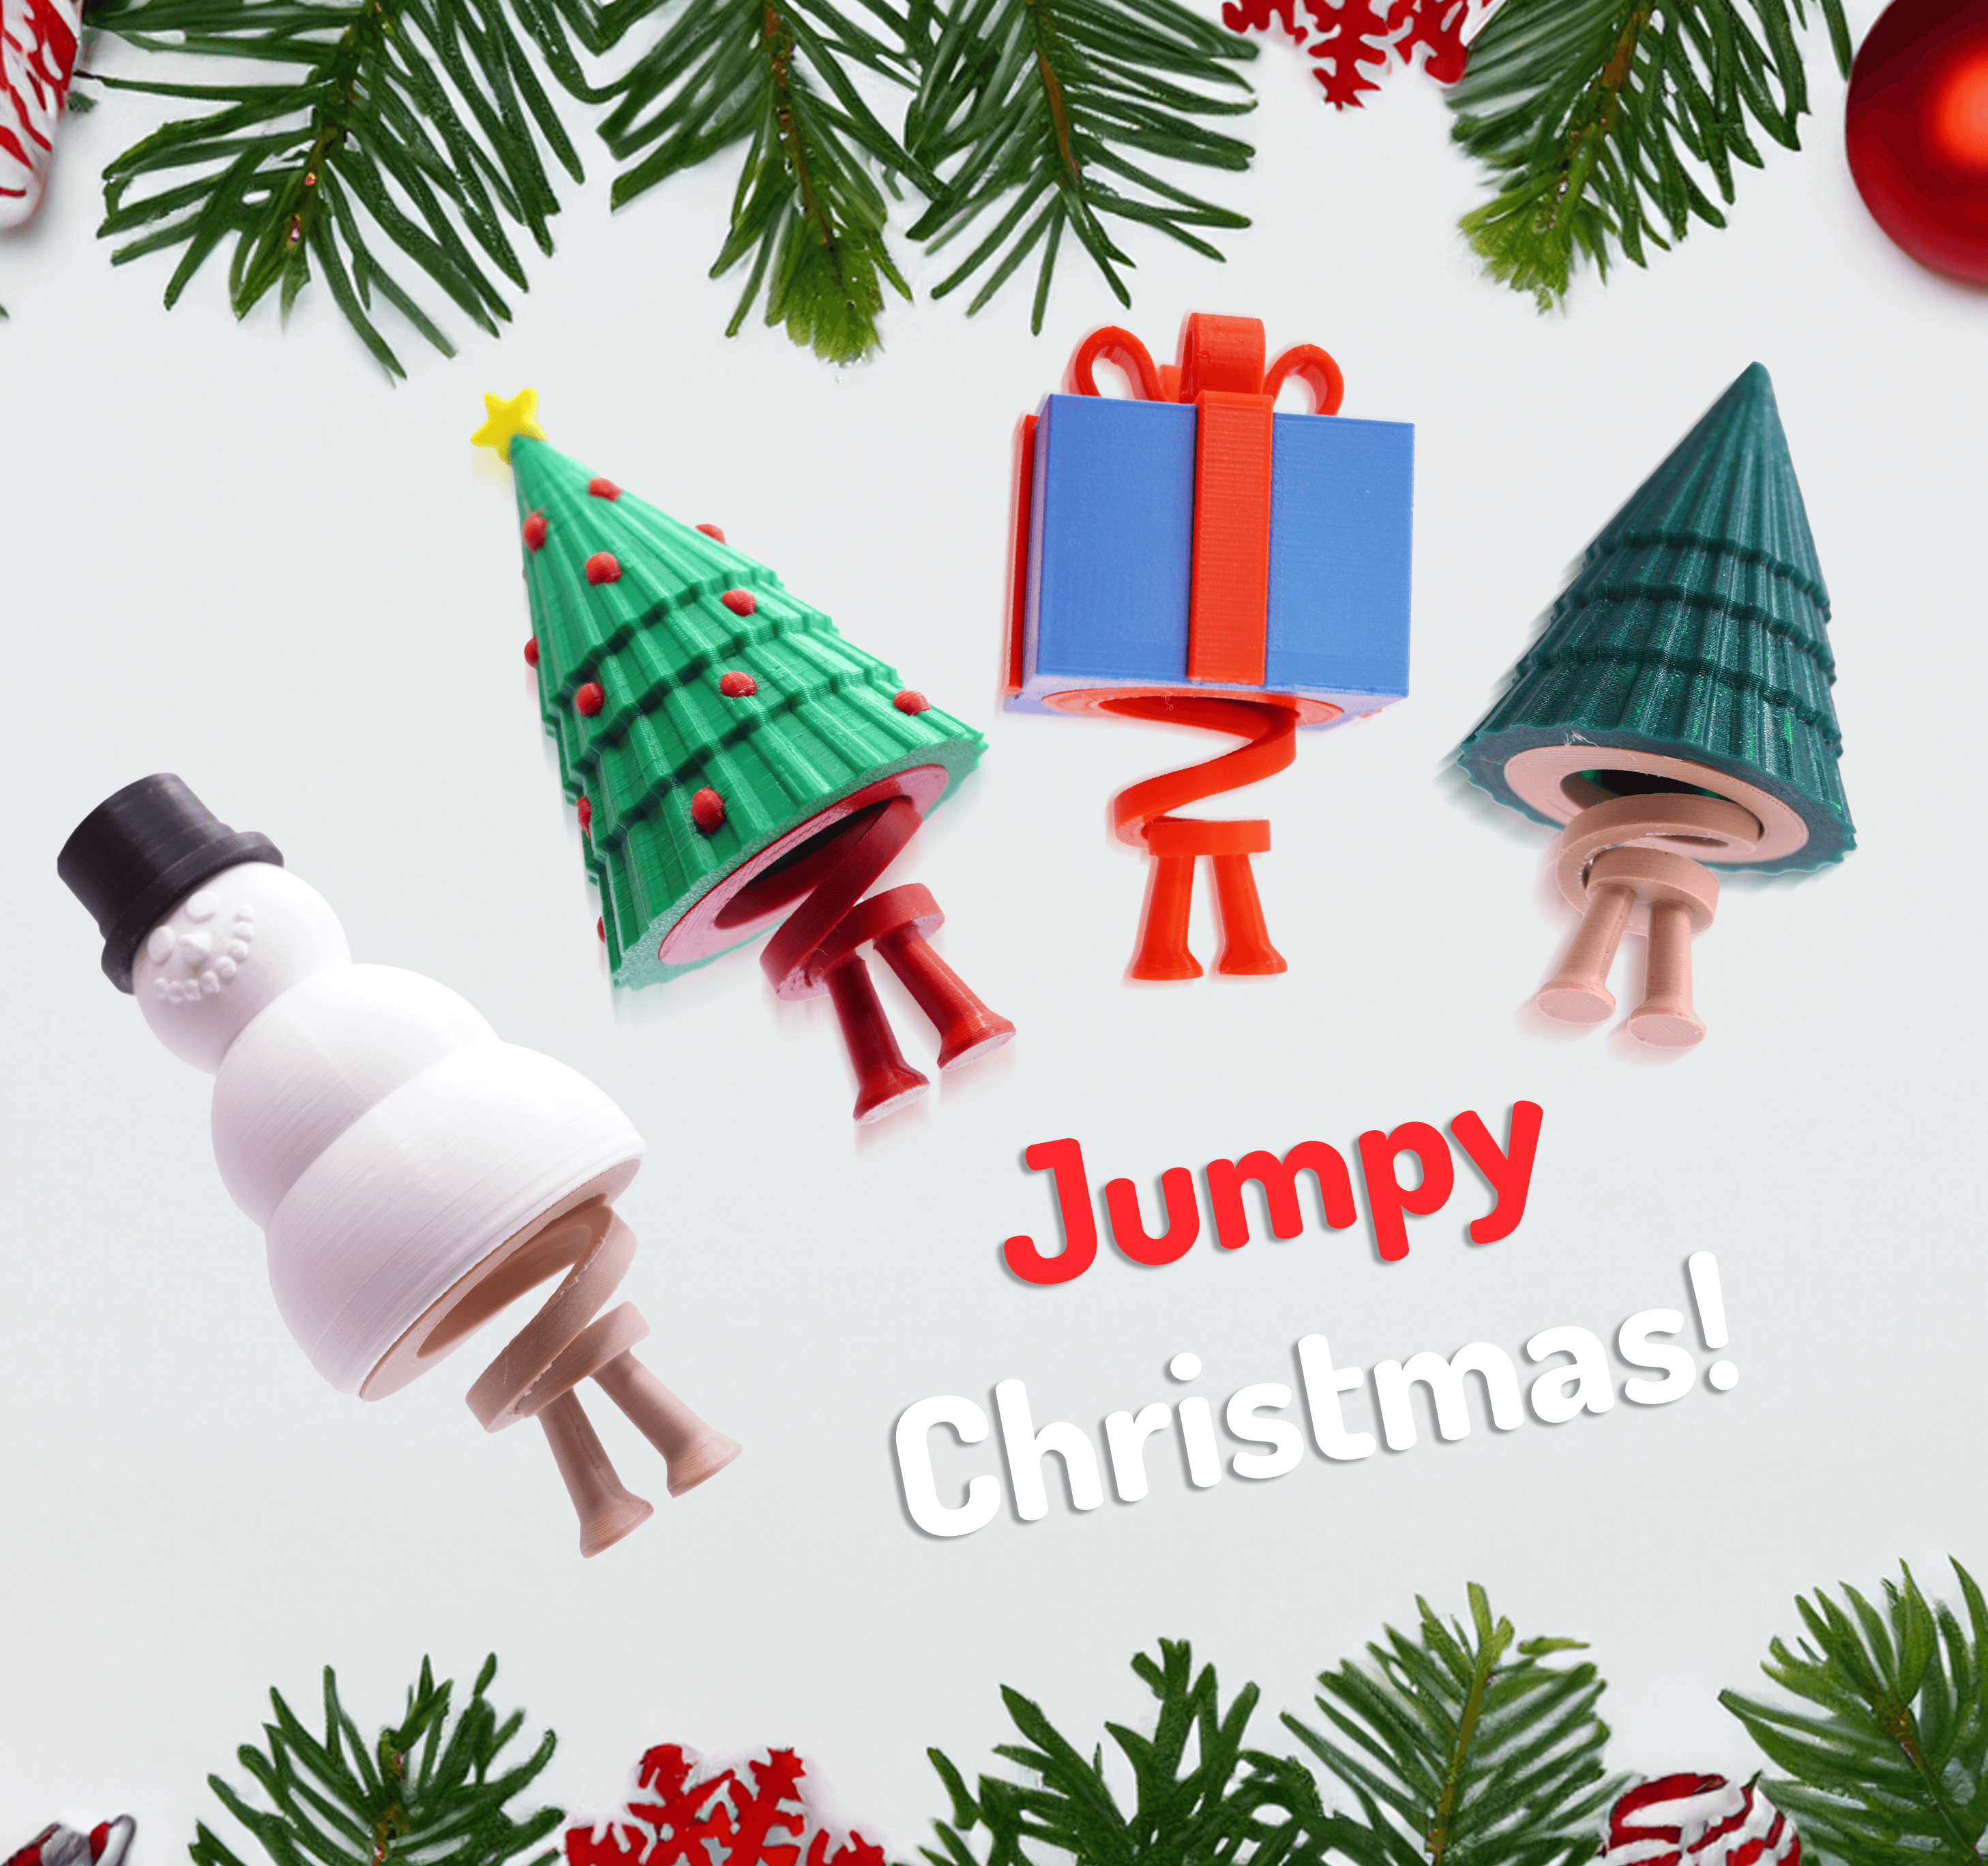 I wish you all a Happy Jumpy Christmas!